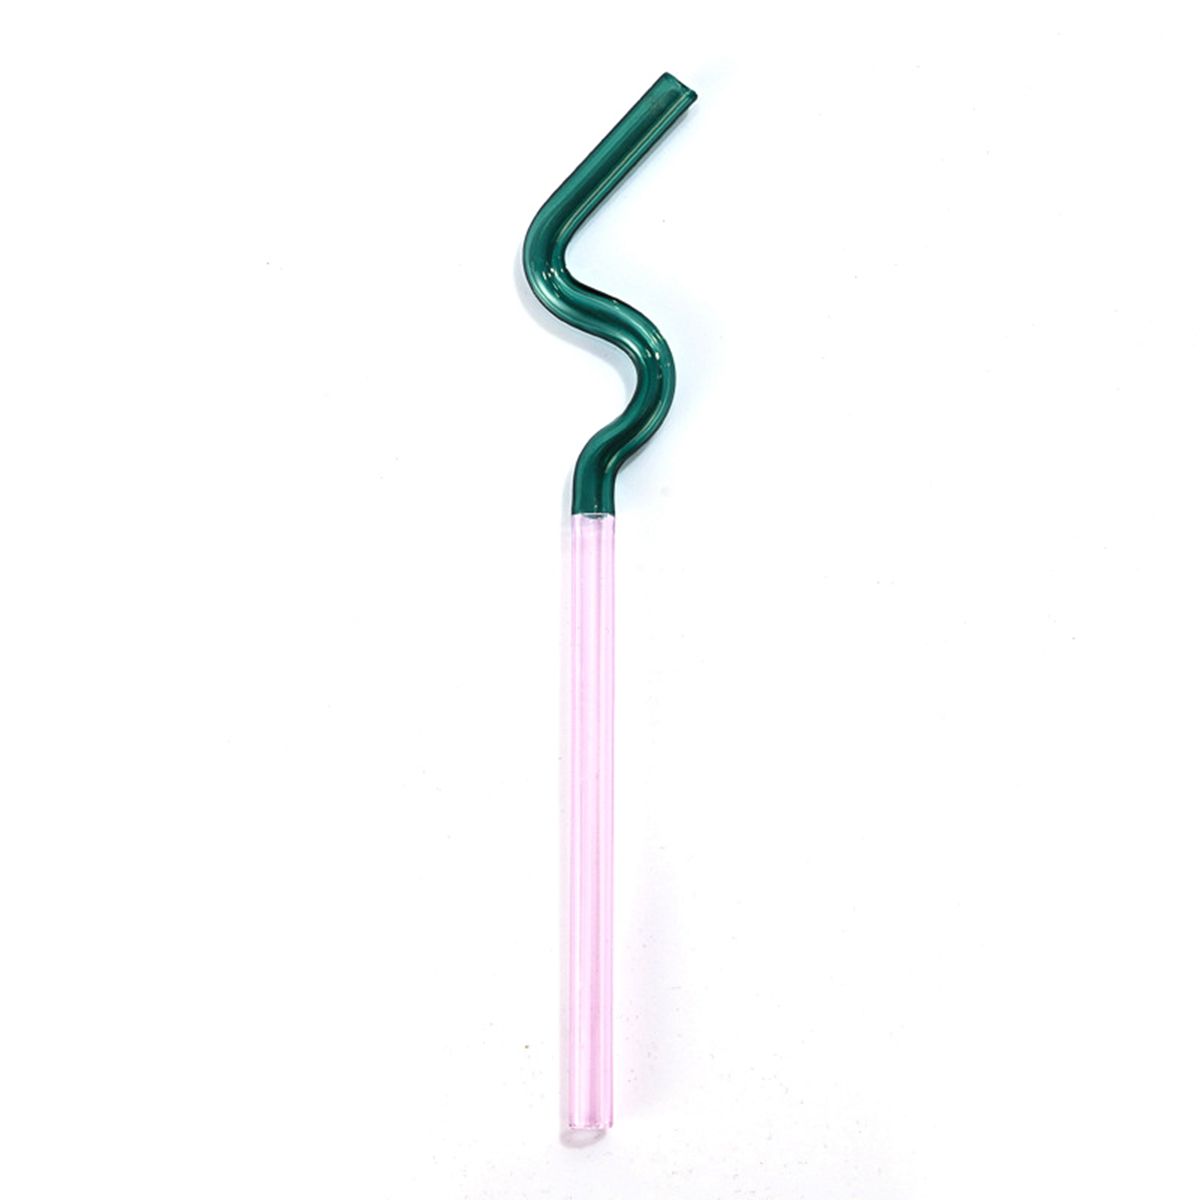 Straight Borosilicate Glass Straws – Bar Supplies